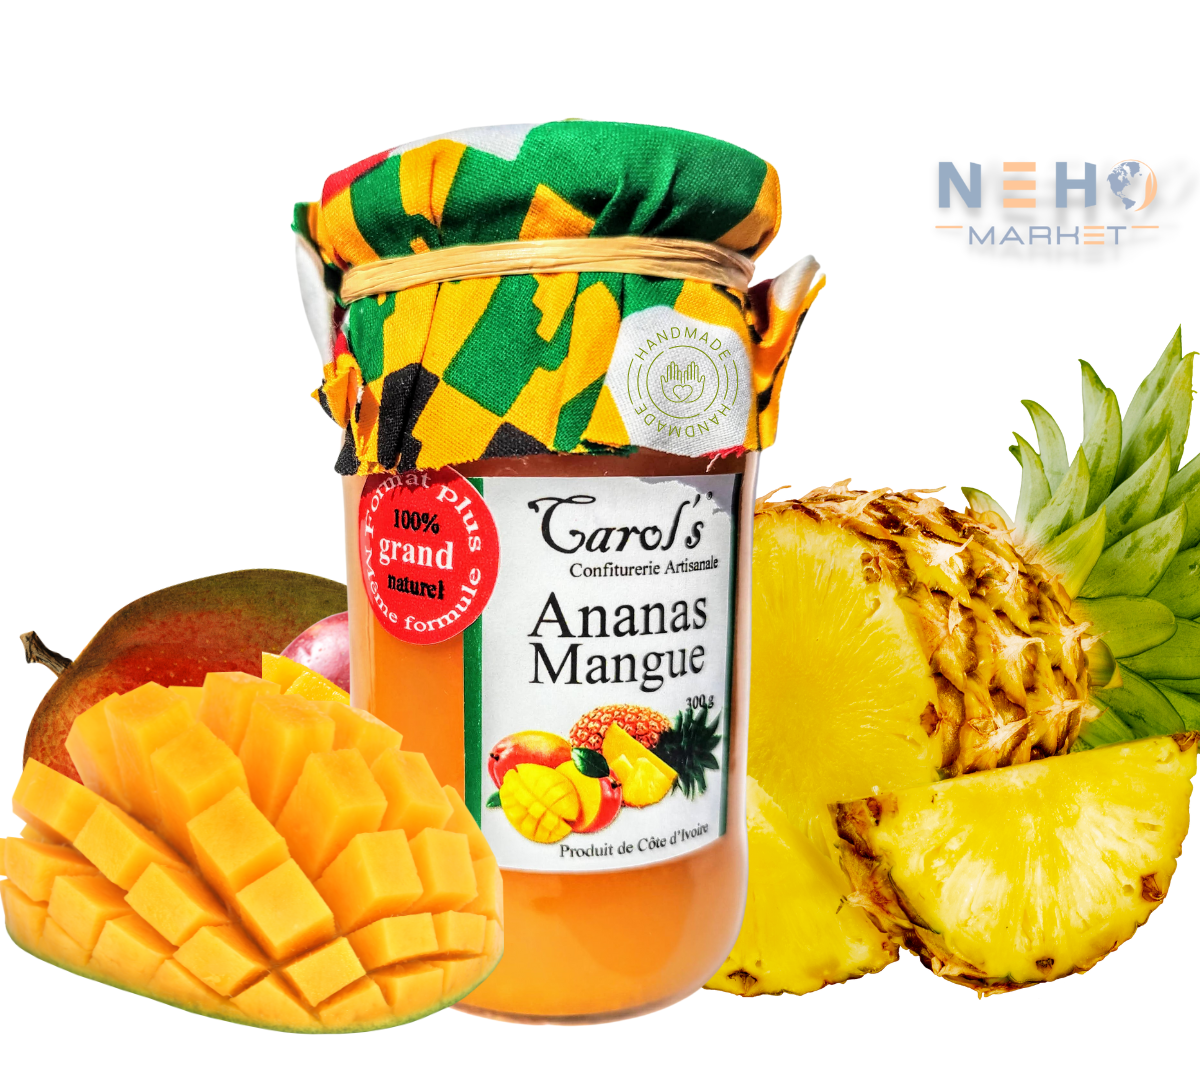 Pineapple &amp; Mango jam - CAROL'S - 300 g - Origin Ivory Coast